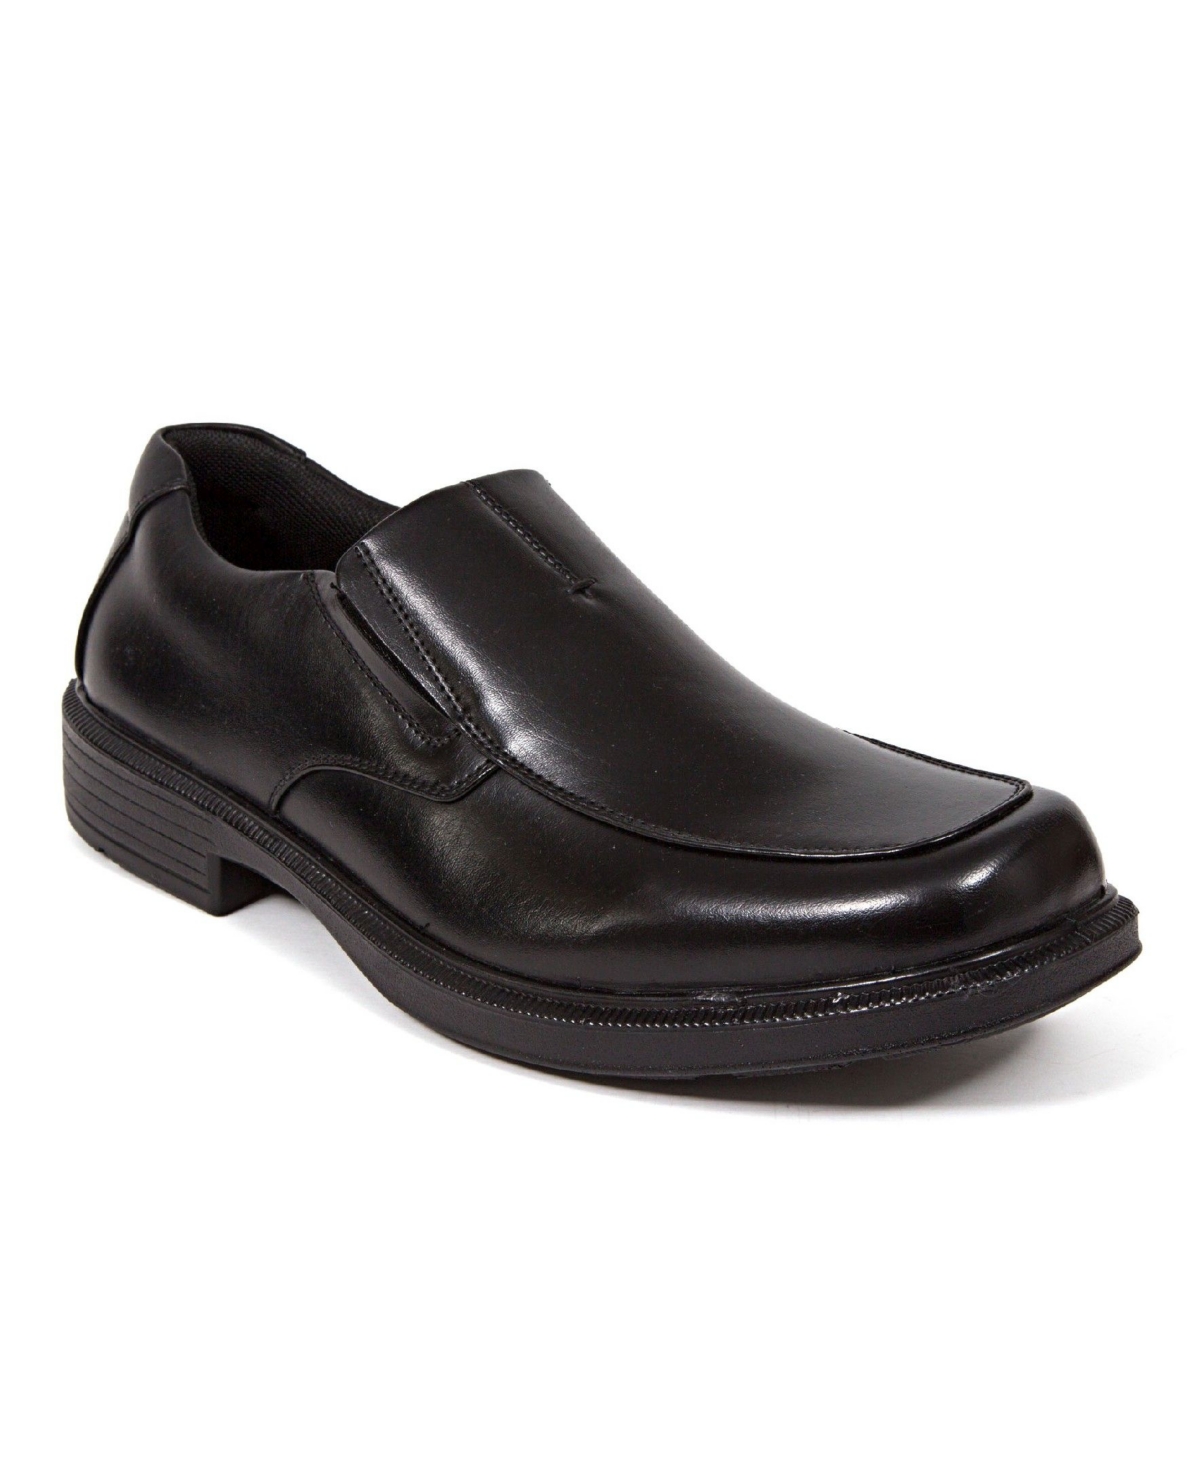 Men's Coney Dress Casual Memory Foam Cushioned Comfort Slip-On Loafers - Black